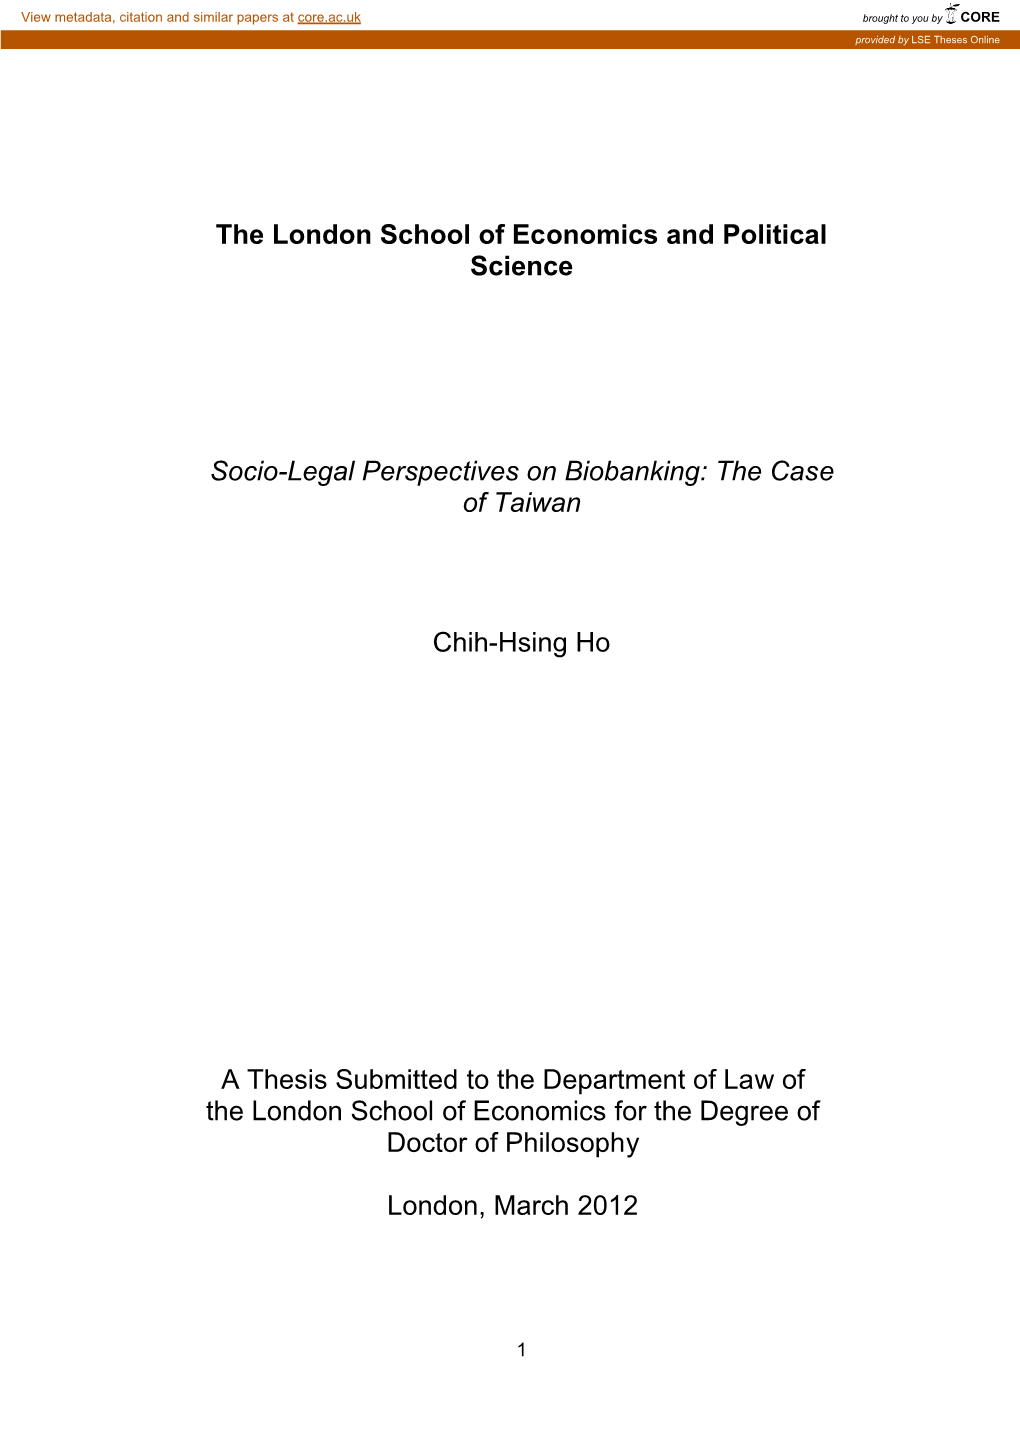 The London School of Economics and Political Science Socio